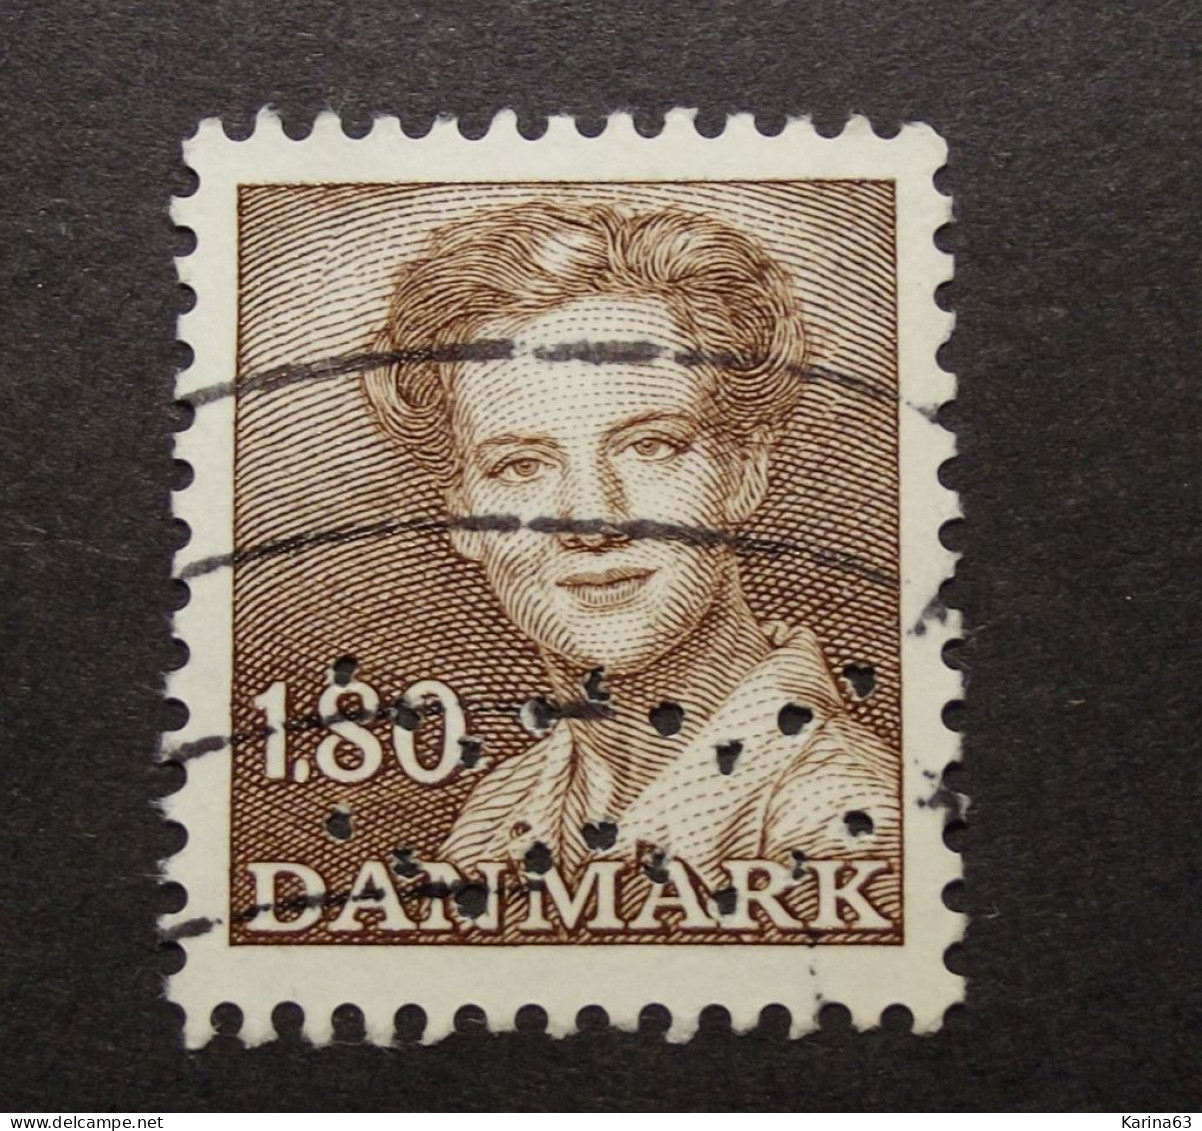 Denmark  - Danemark - 1975 - ( Queen Margrethe ) Perfin - Lochung -  Waves - Kobenhavns Kommune - Cancelled - Used Stamps